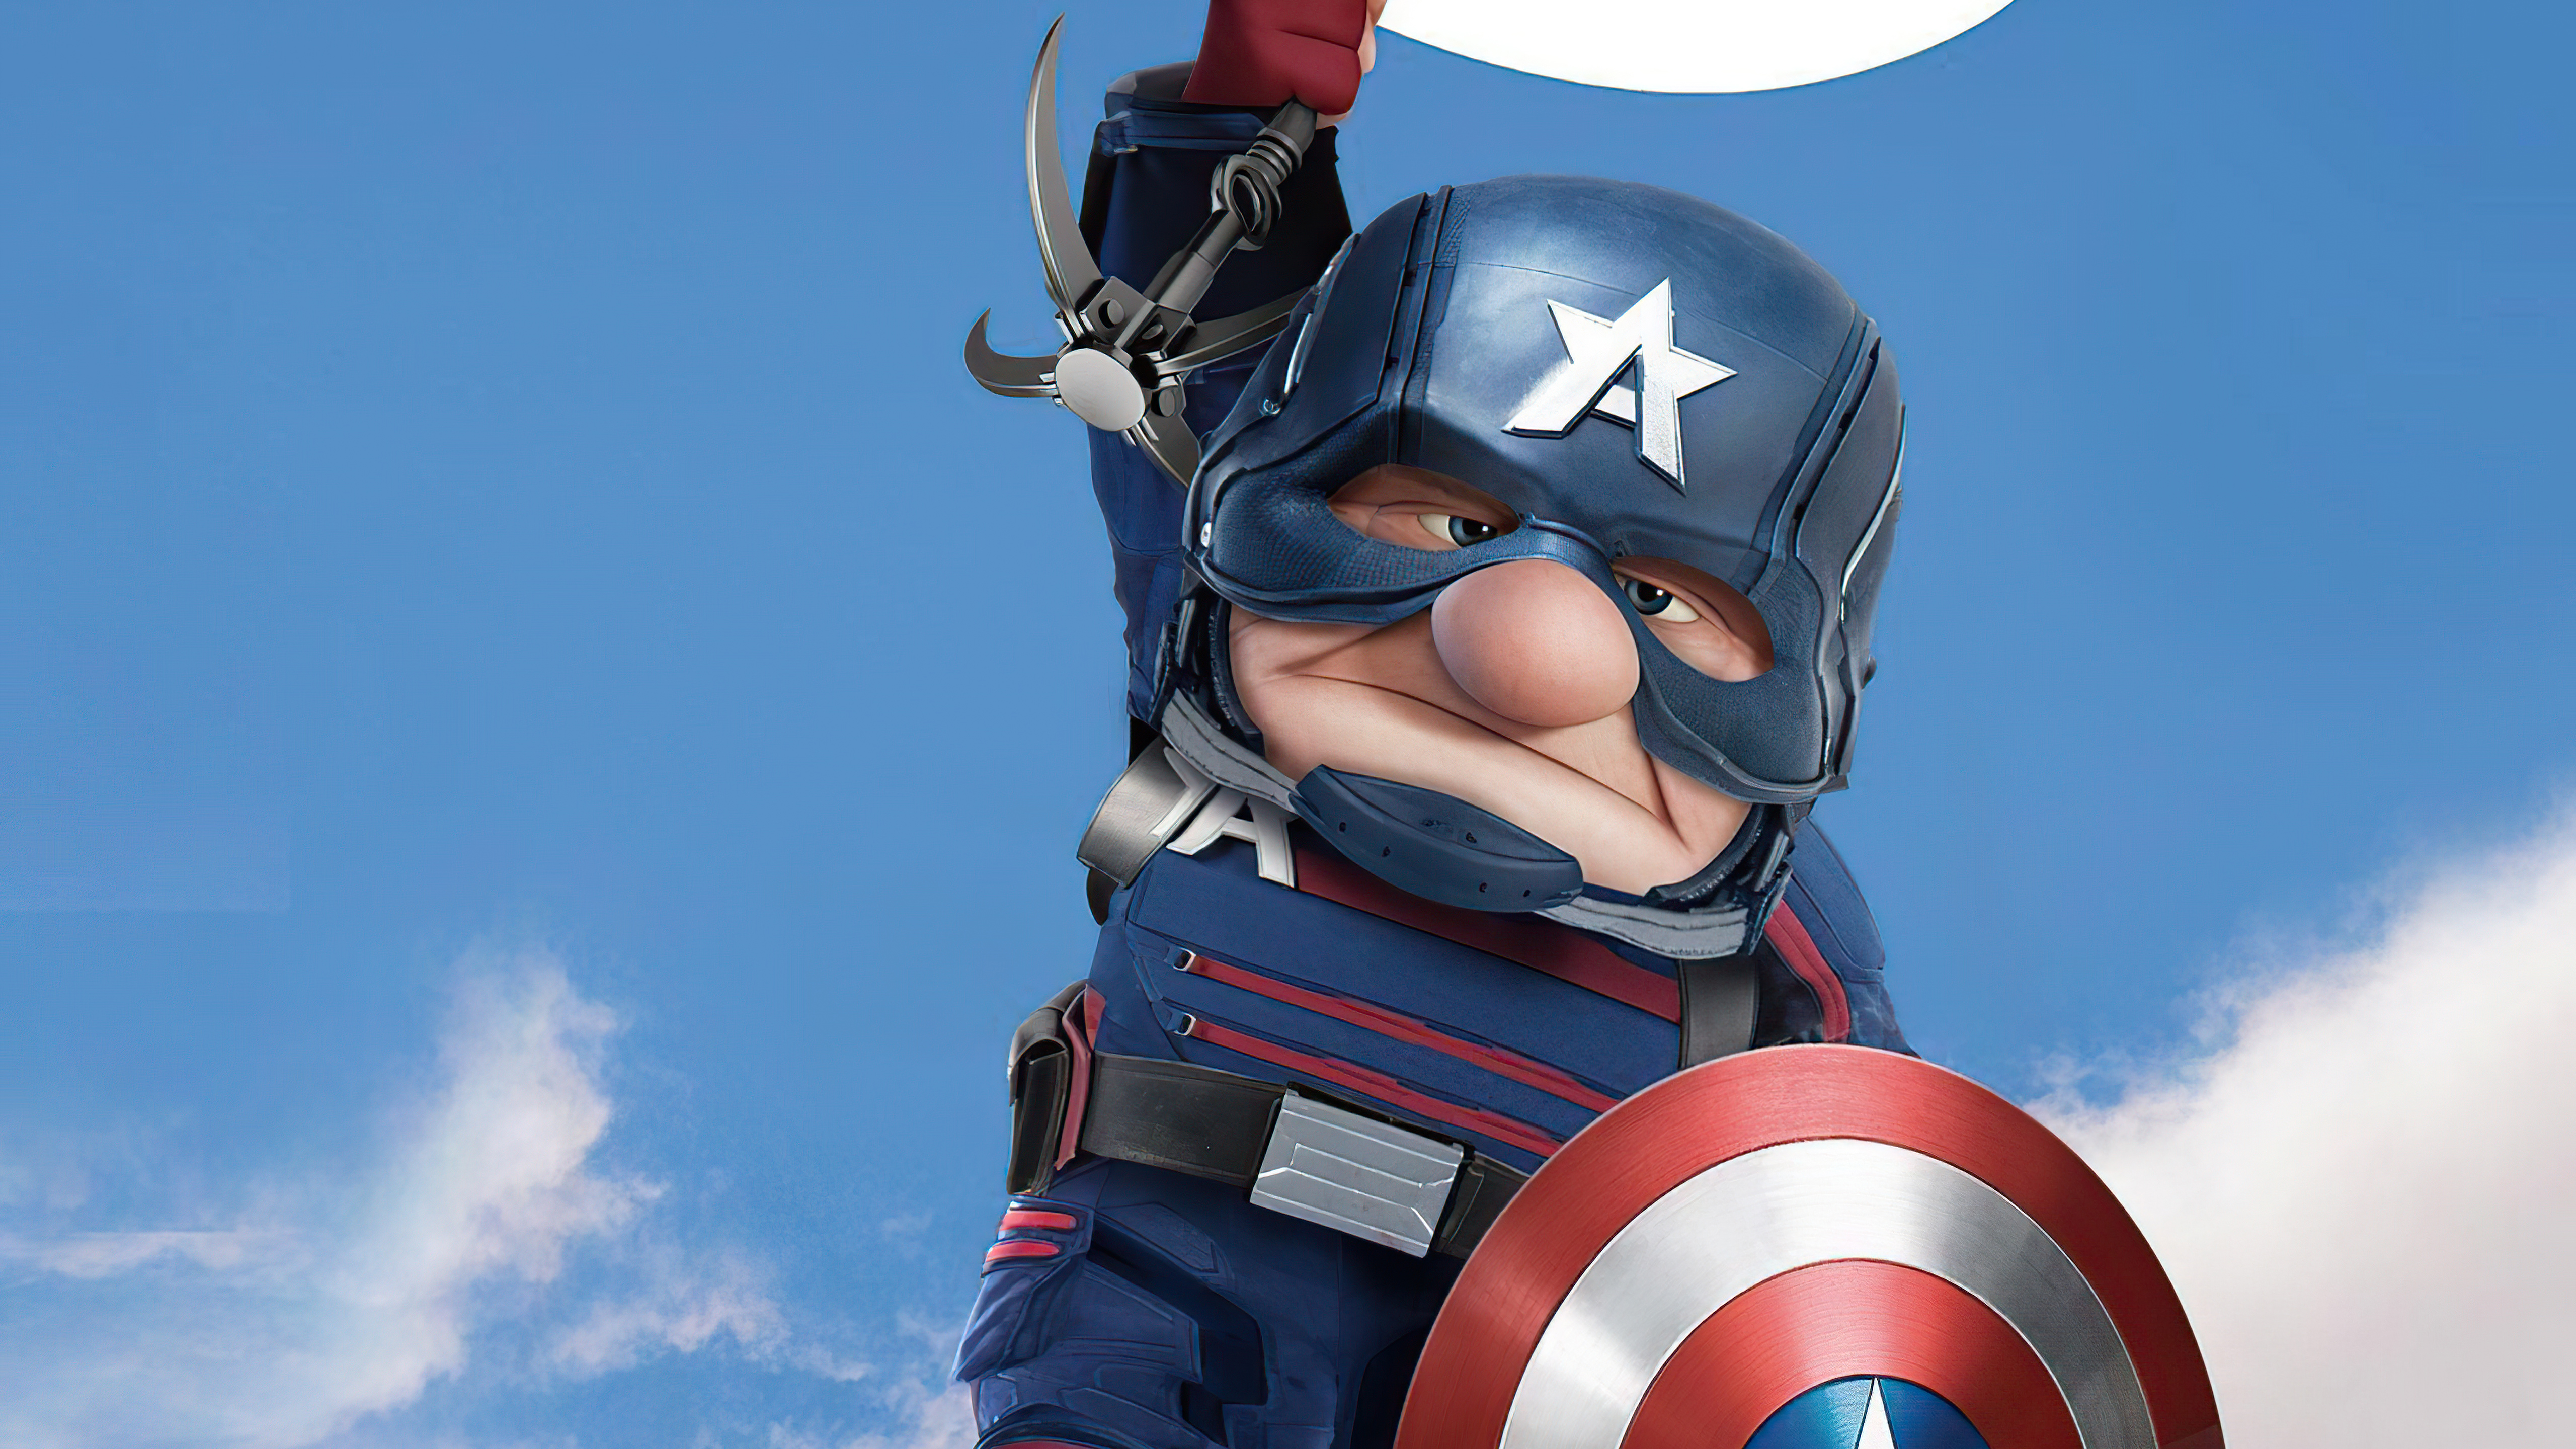 Wallpapers cartoons superheroes captain america on the desktop